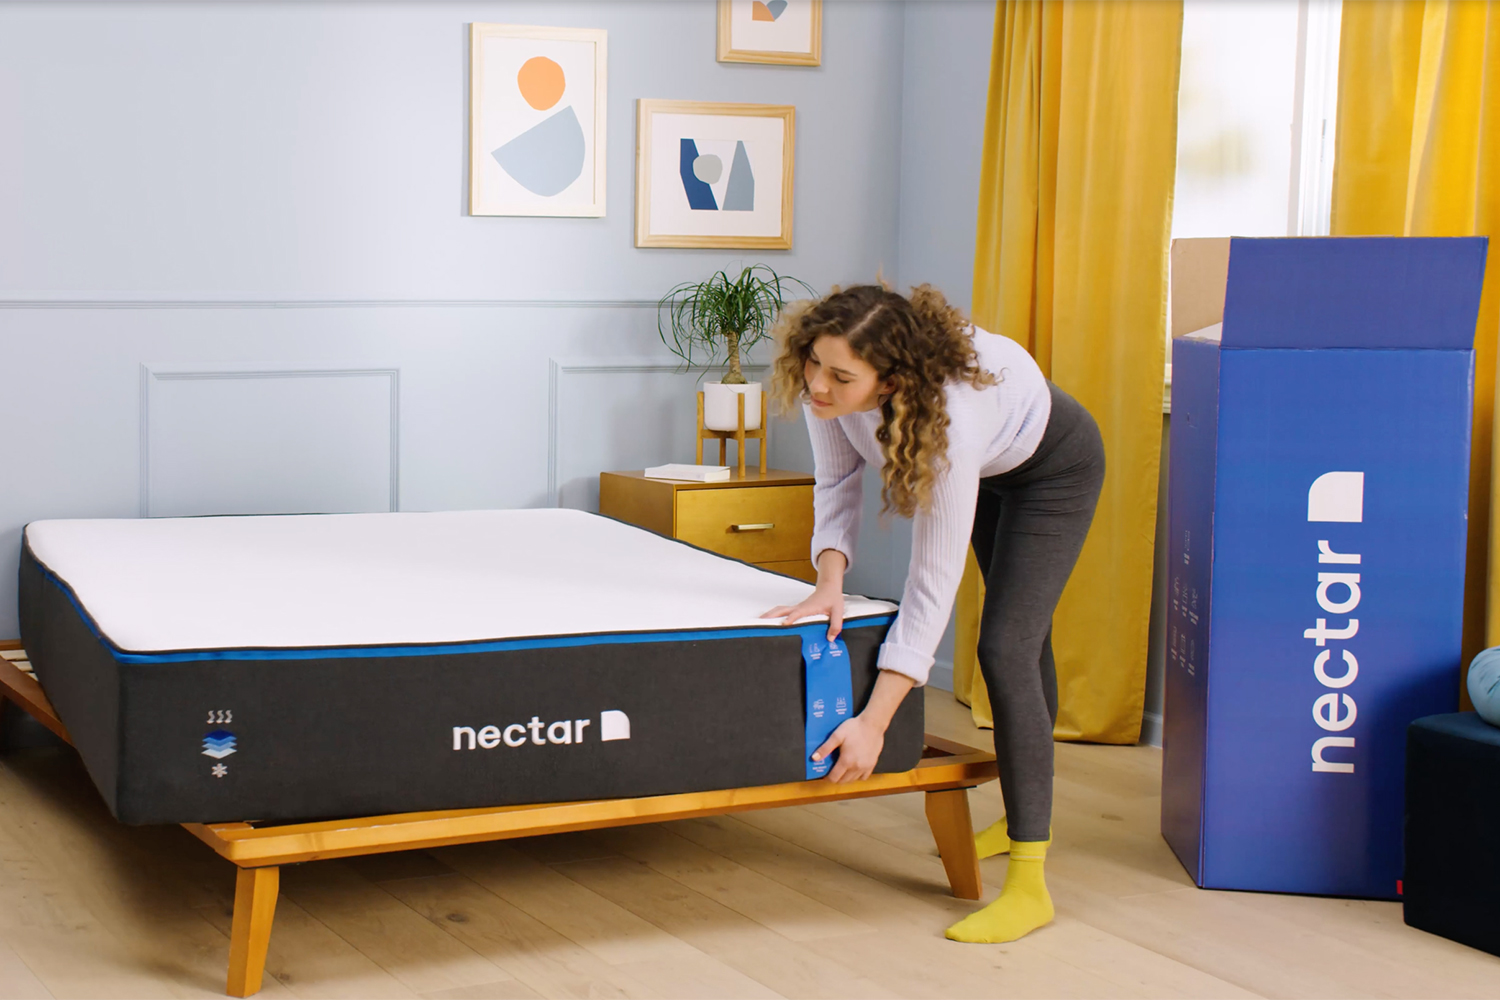 nectar mattress in store locator